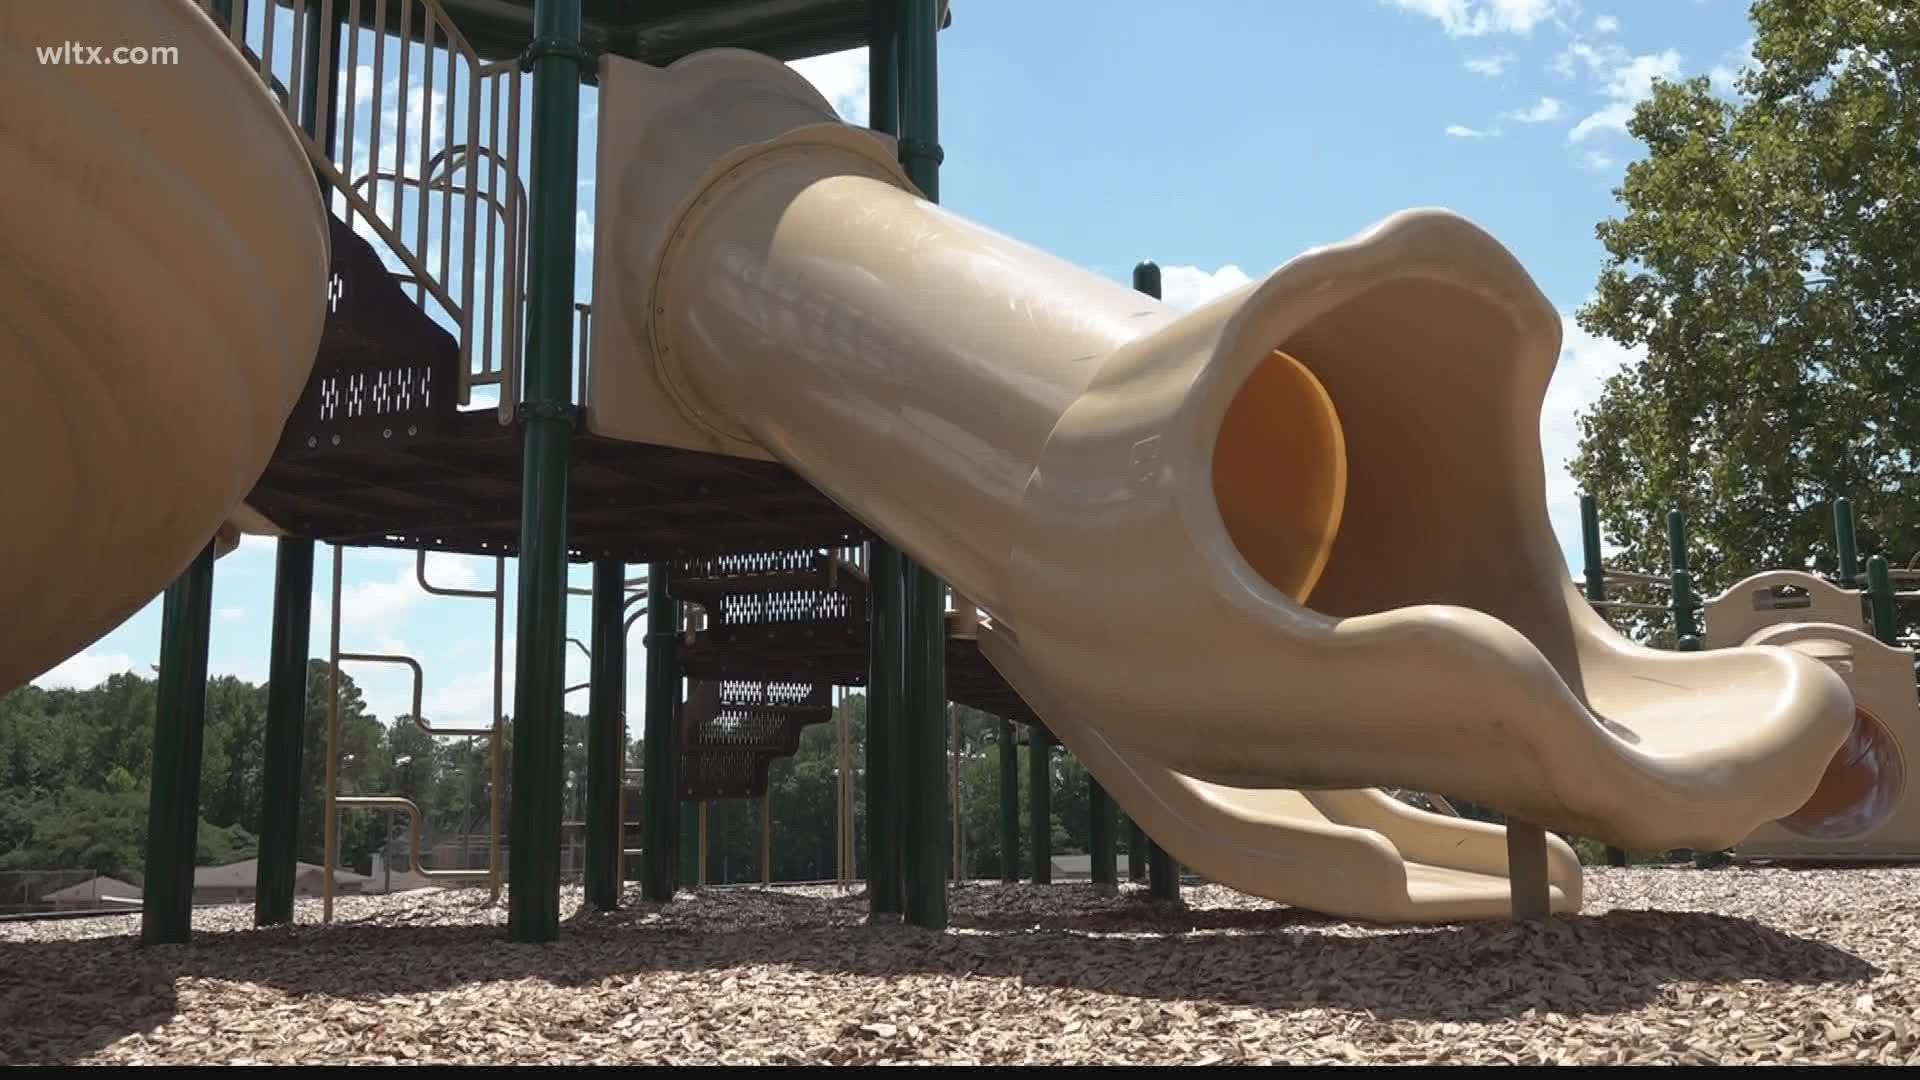 0Each year, 200,000 children get hurt from having fun on the playground